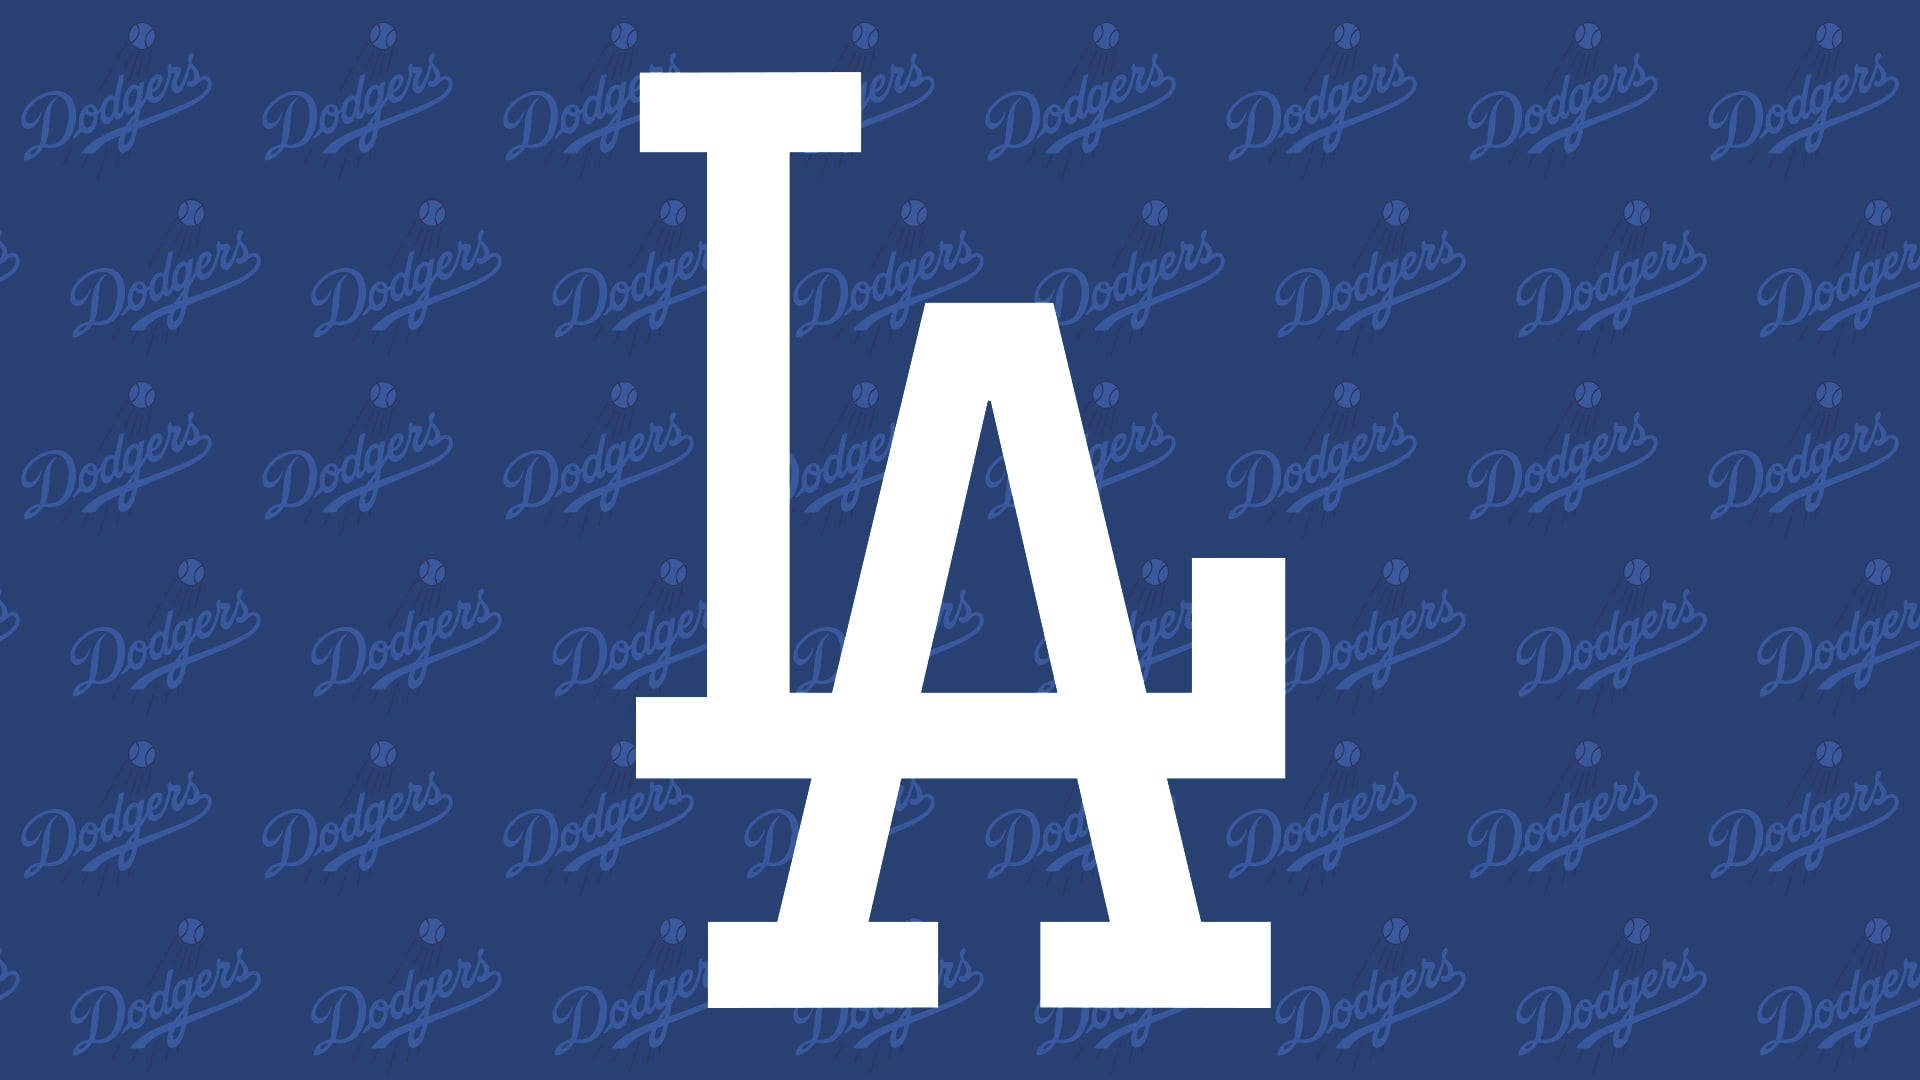 Los Angeles Dodgers Patterned Backdrop Wallpaper